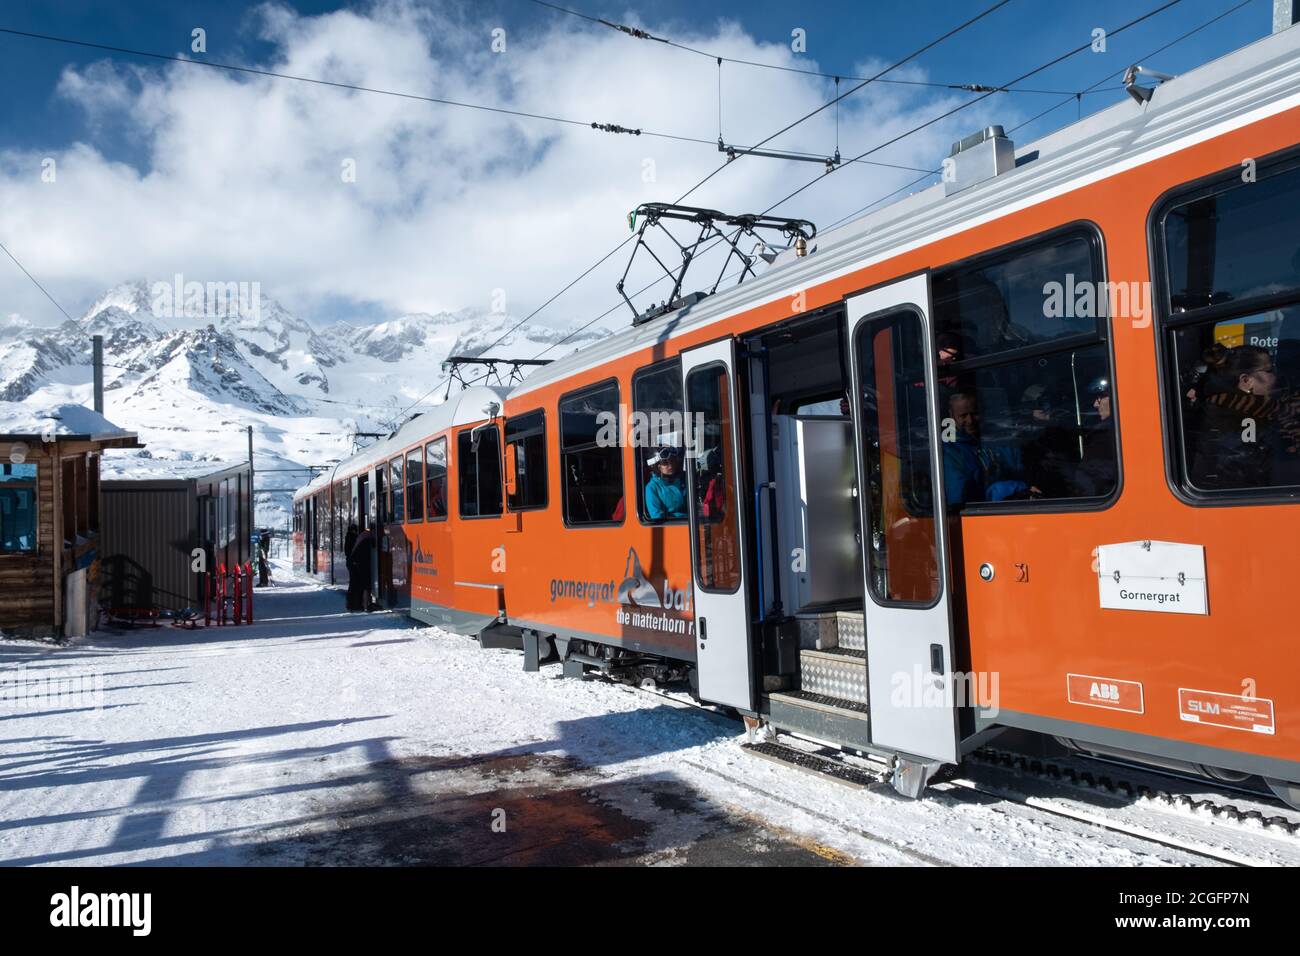 Zermatt, Switzerland - Feb 19 2020: The Gornergrat train in winter, popular among skiers. It is the highest cogwheel train in Europe. Stock Photo